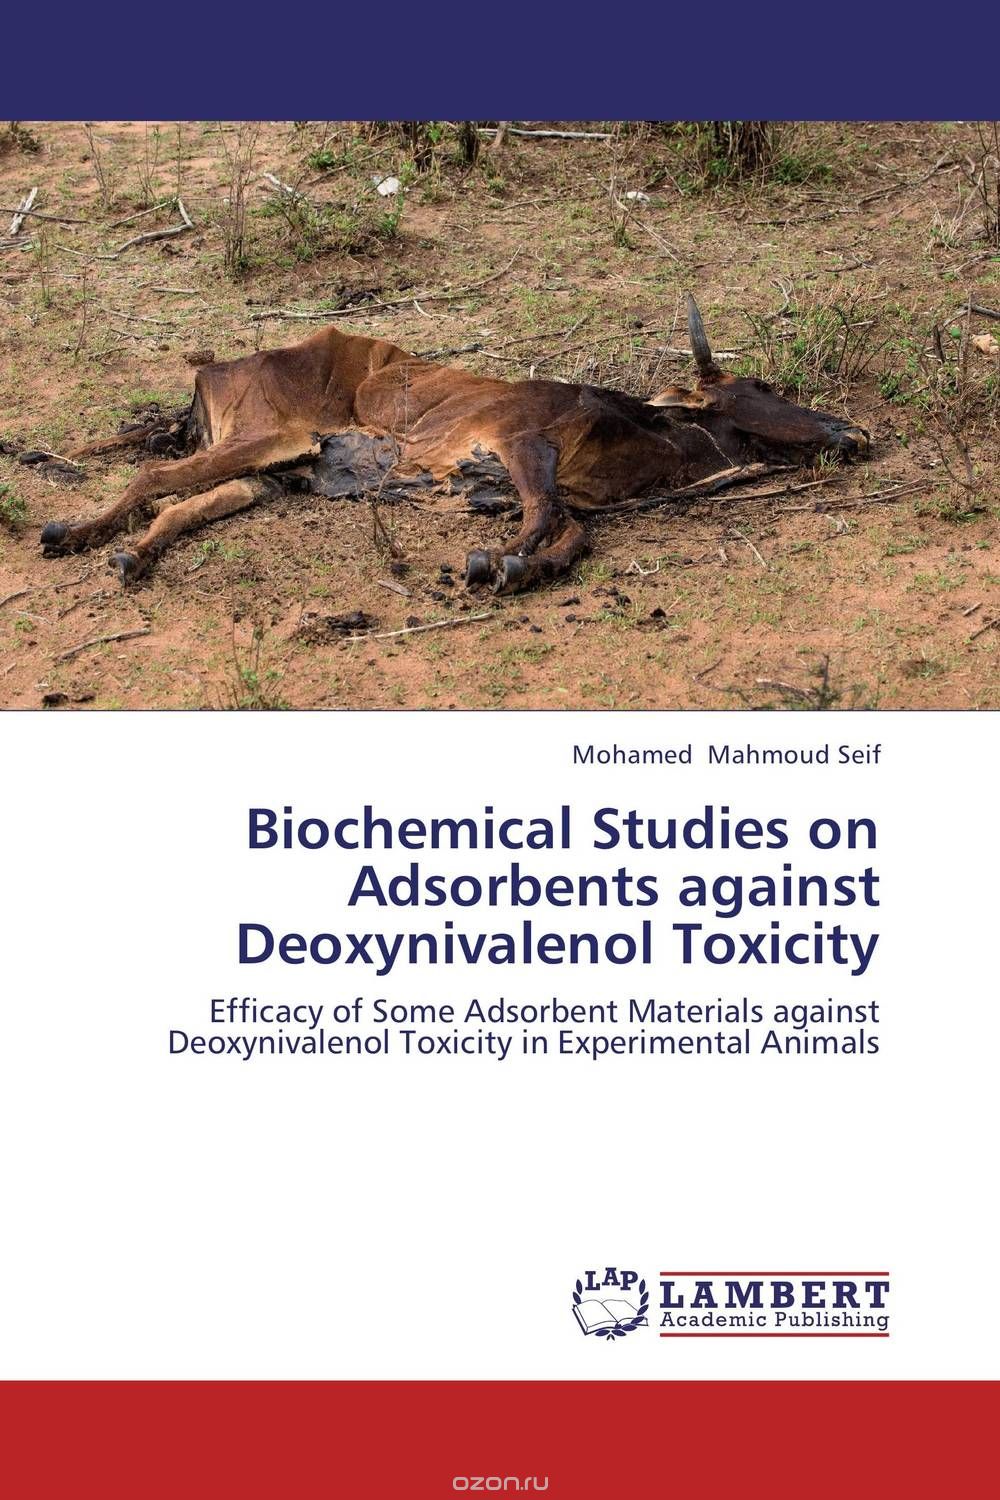 Скачать книгу "Biochemical Studies on Adsorbents against Deoxynivalenol Toxicity"